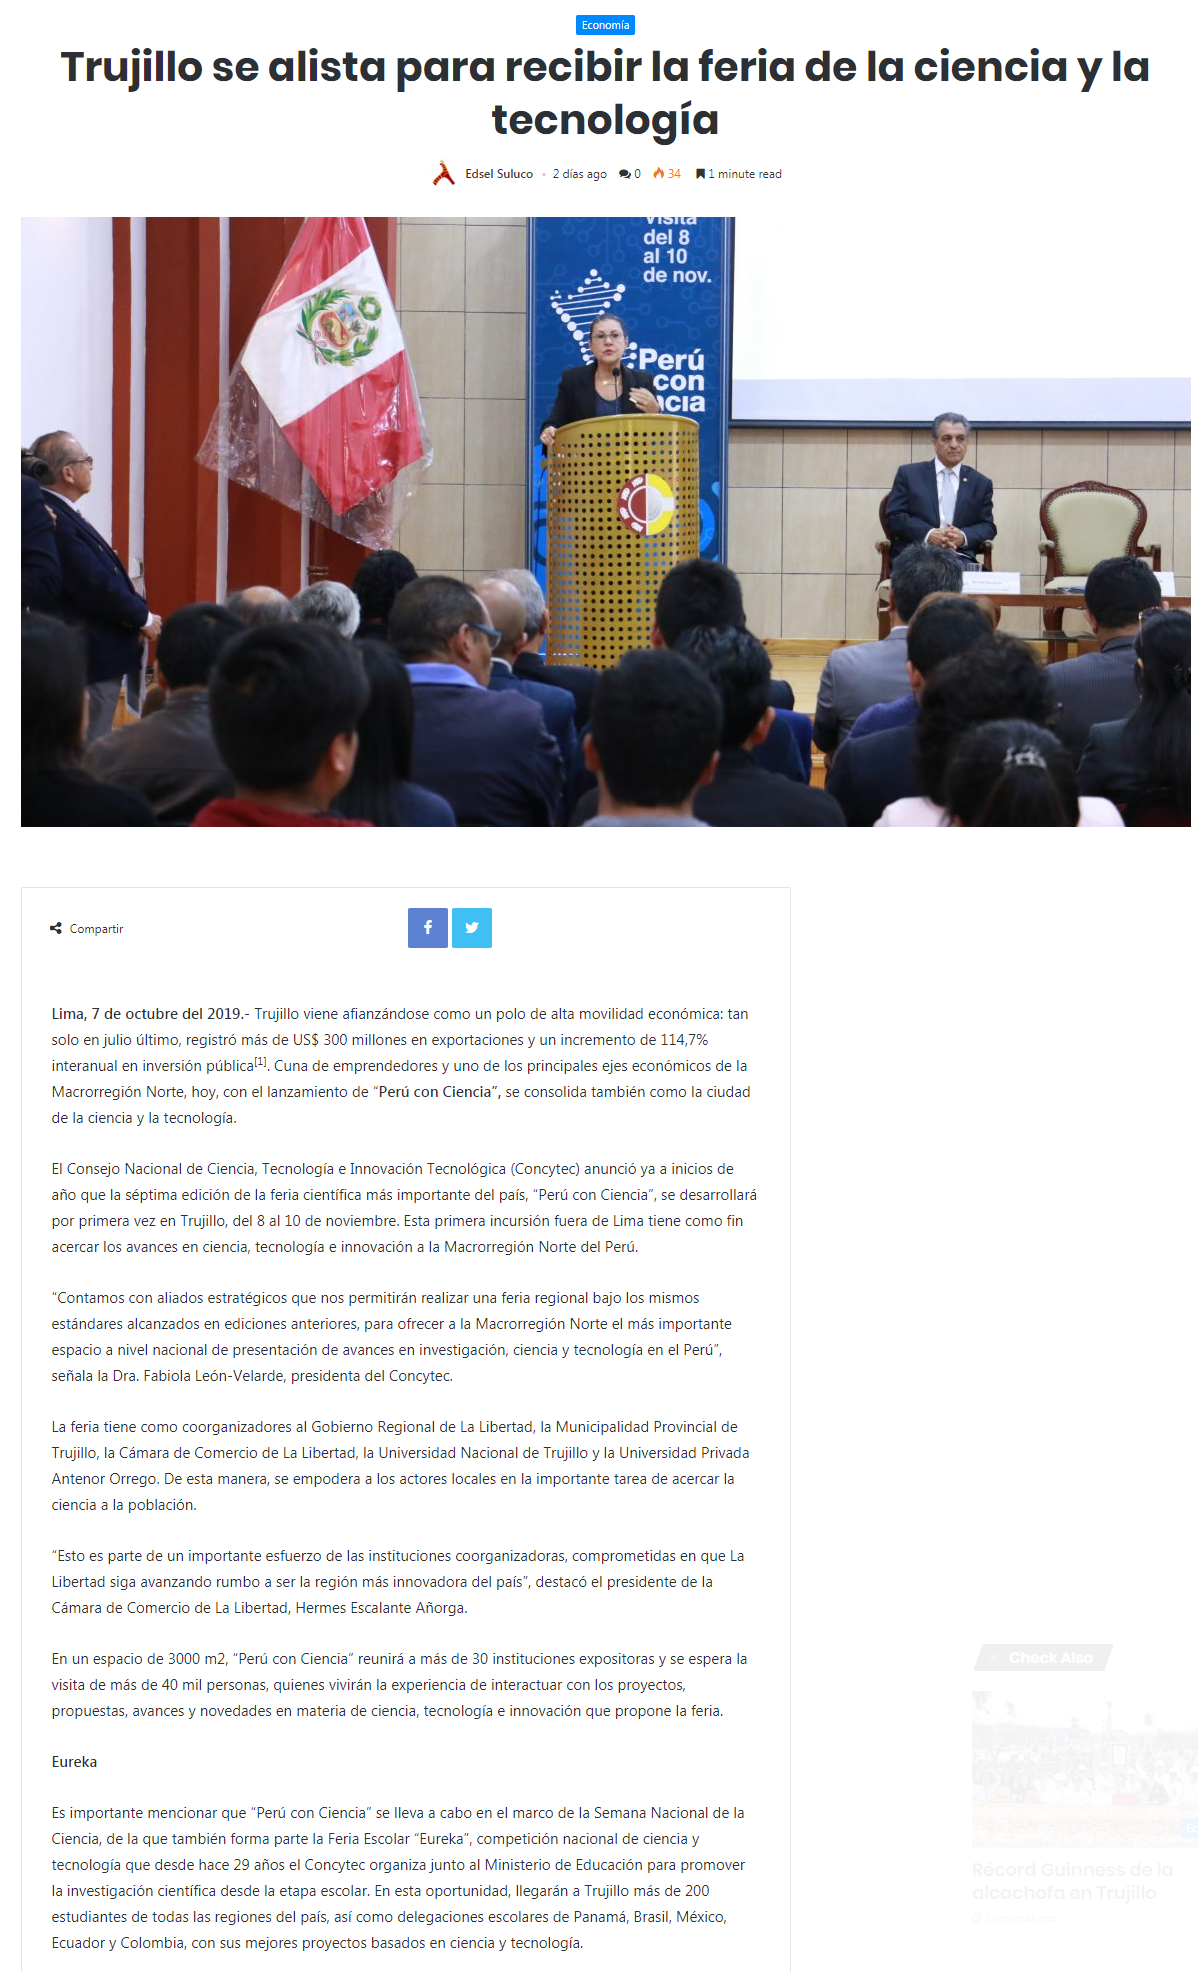 09.10.19.19 News Trujillo acogerá Perú con Ciencia